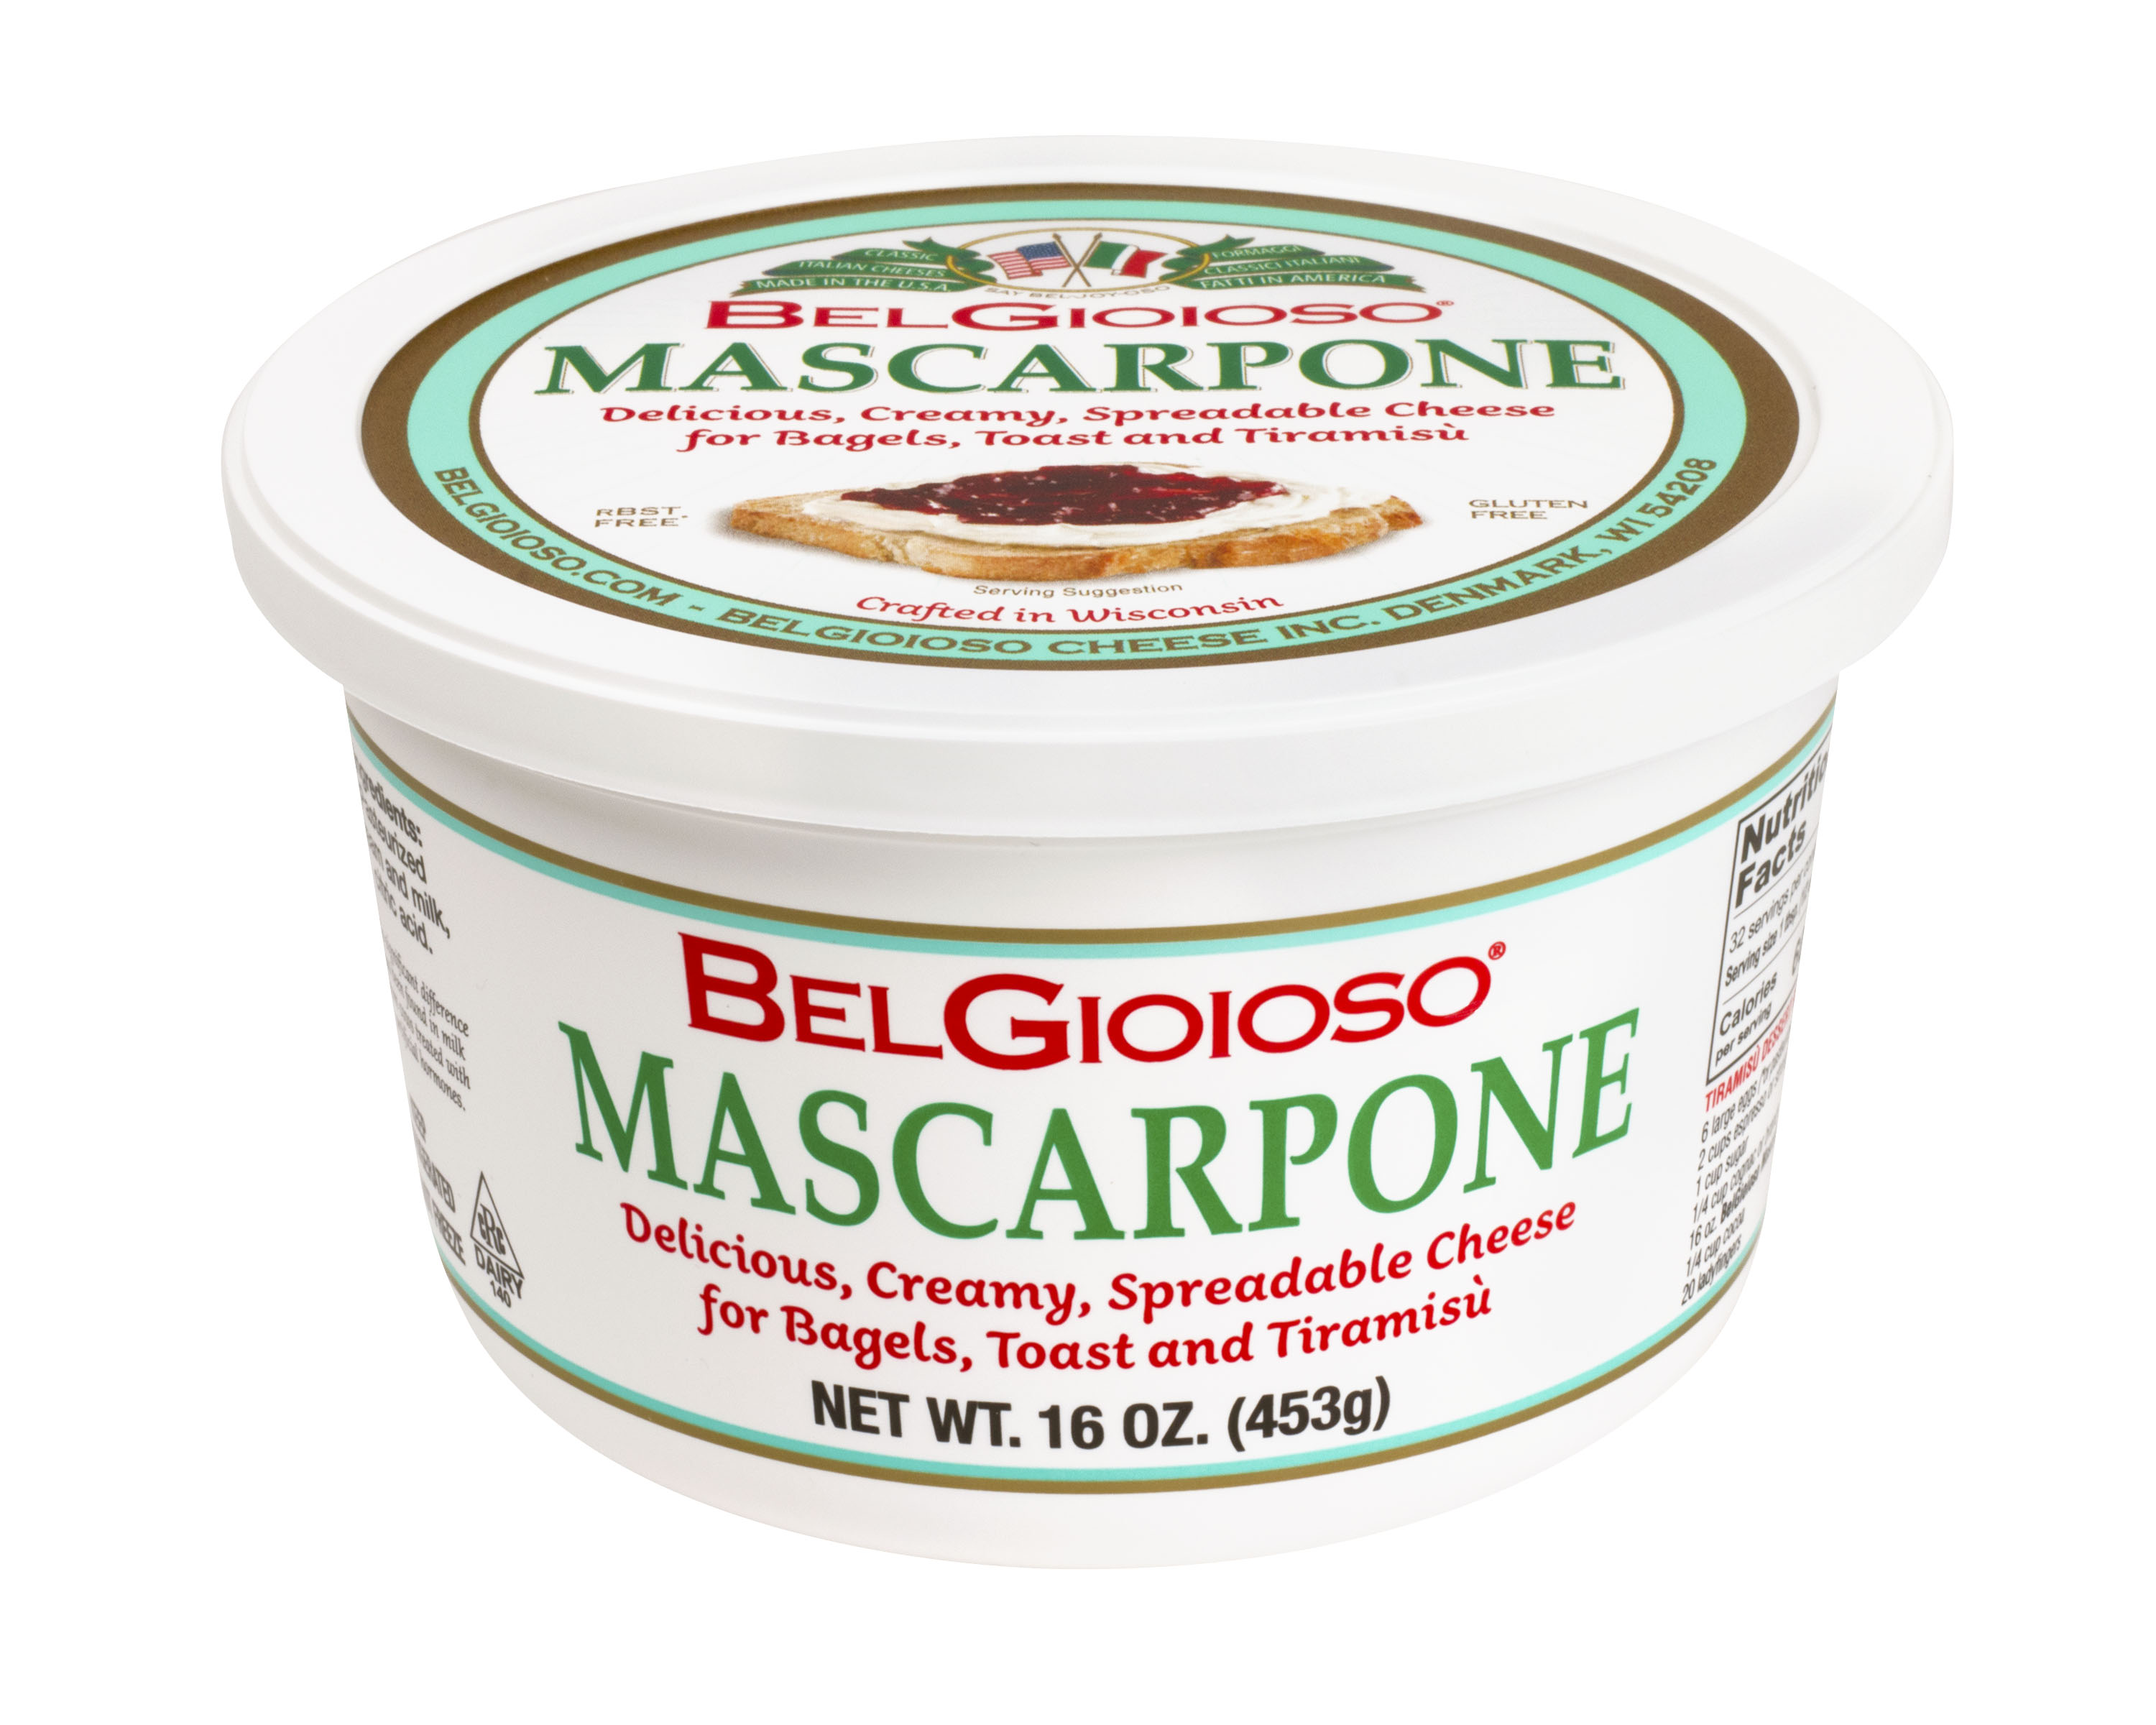 Mascarpone 1 Lb